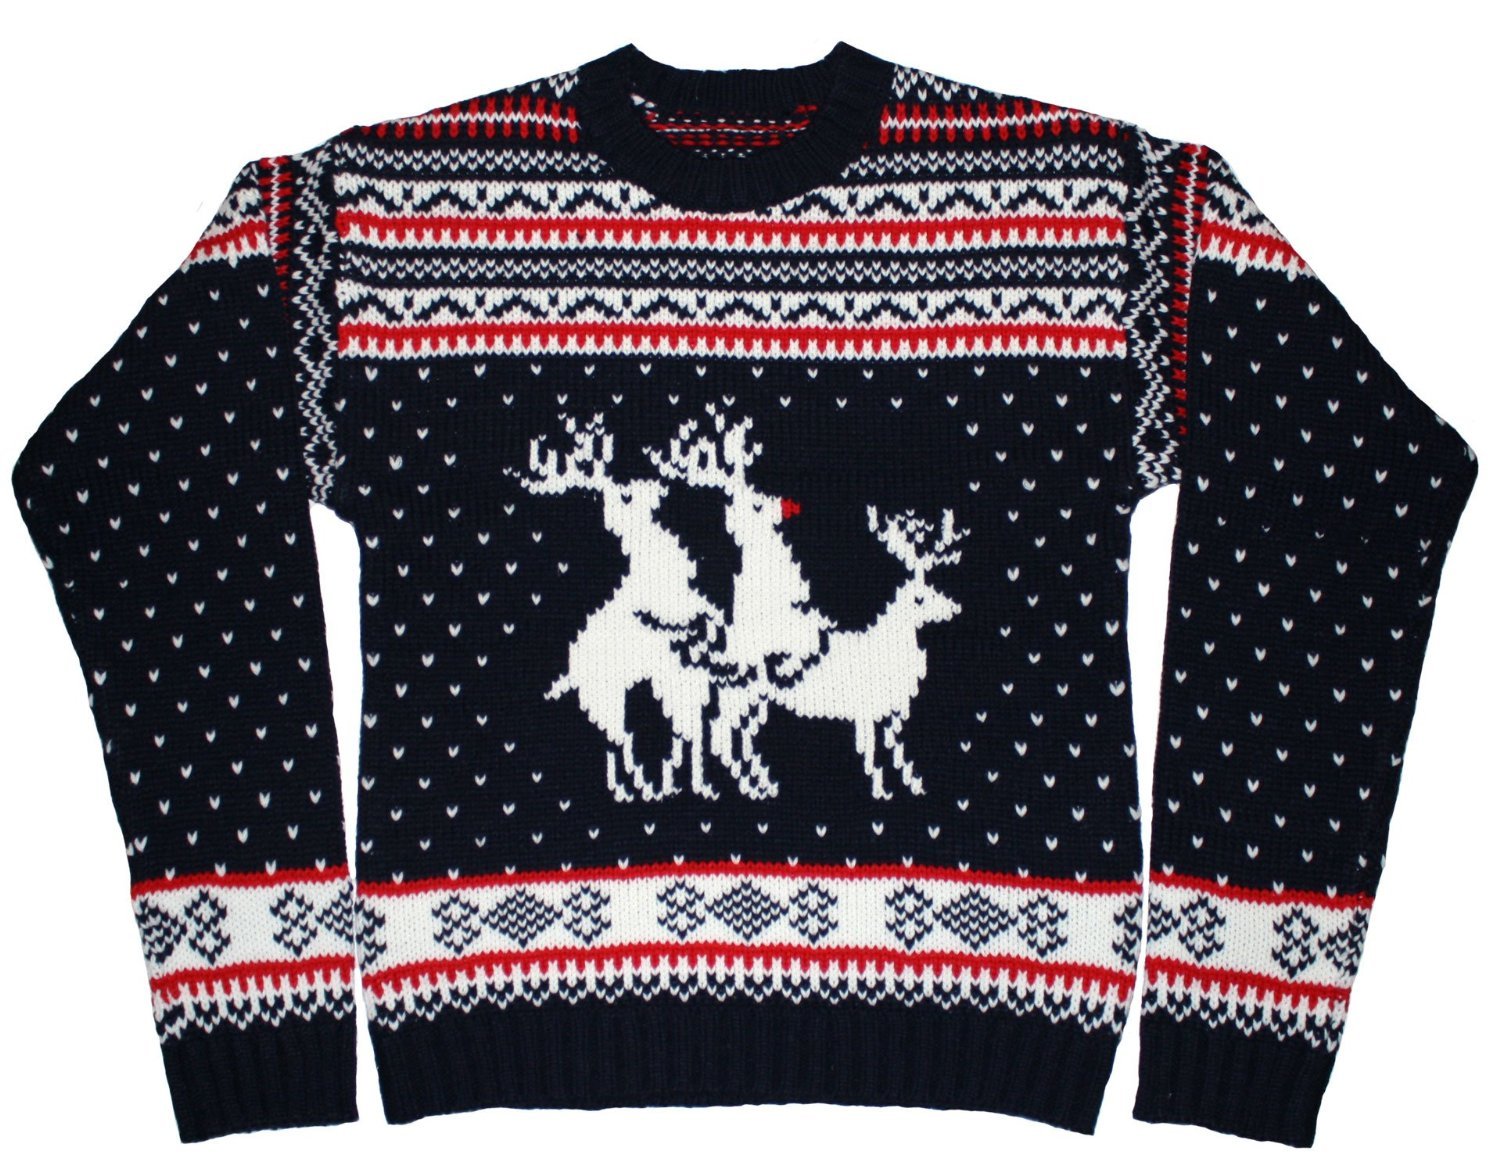 Reindeer threesome sweater